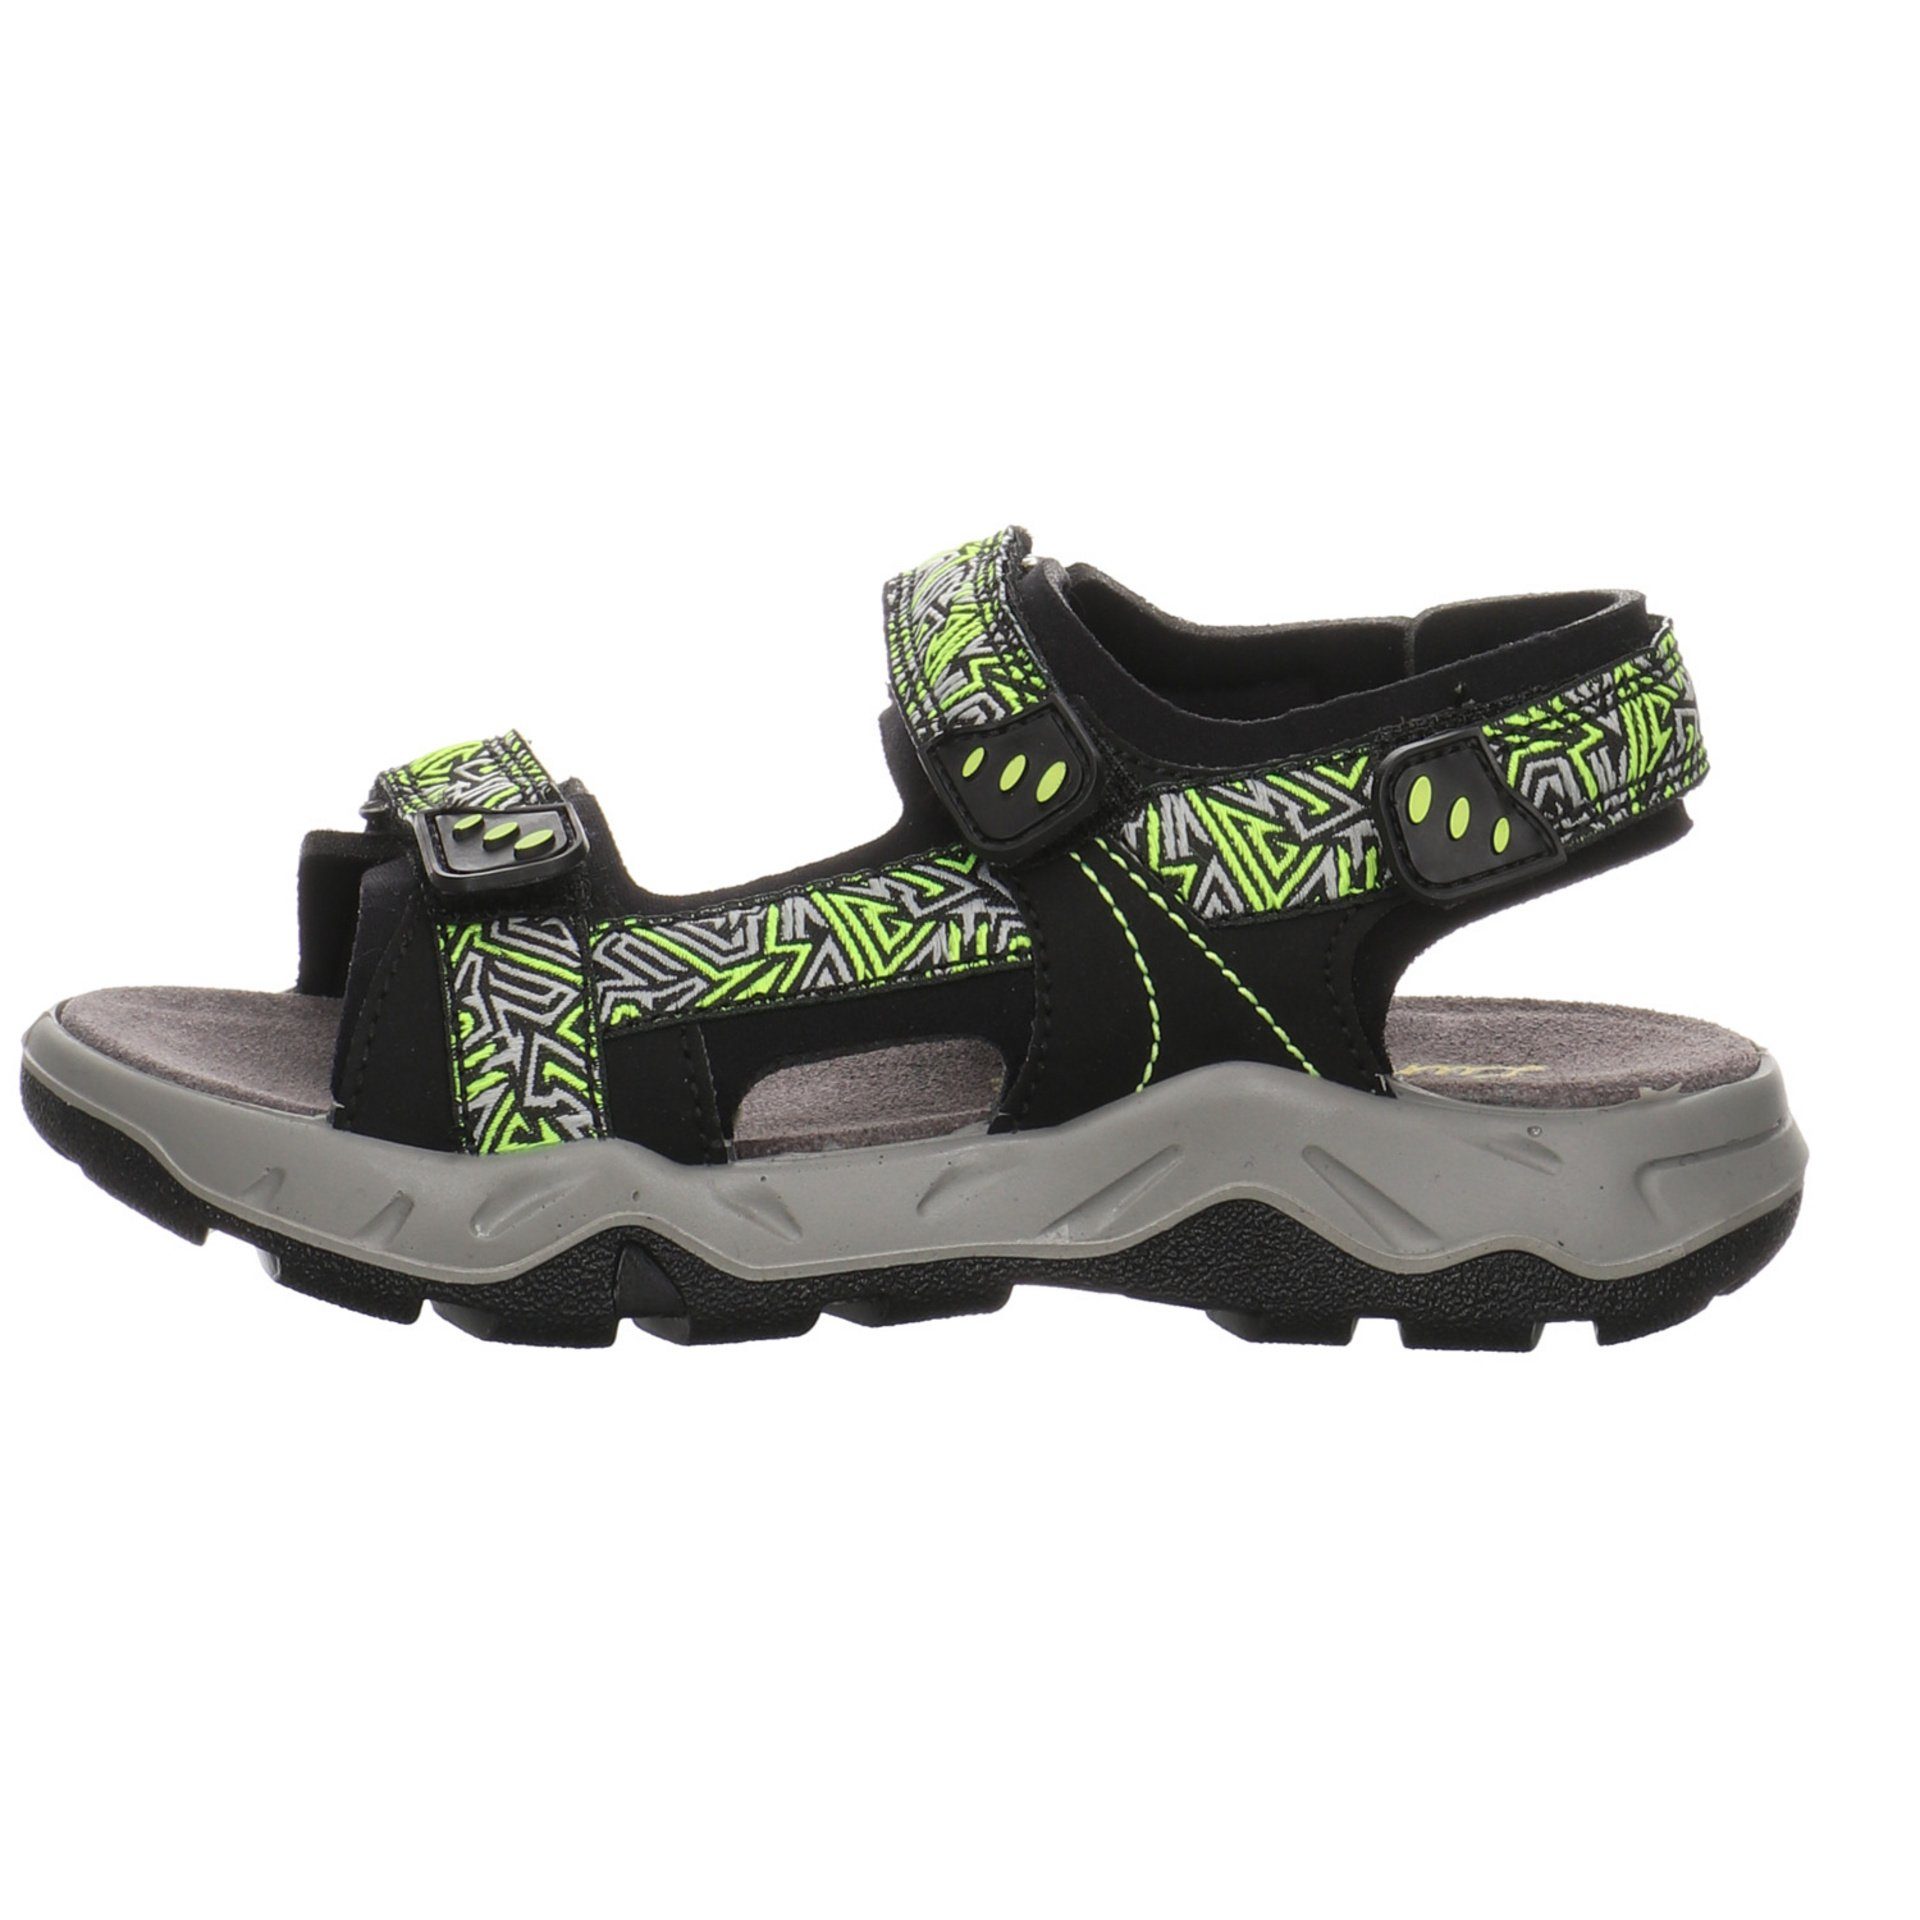 Multi Sandale Synthetikkombination Lurchi Sandale Jungen Schuhe Odono Black Kinderschuhe Salamander Sandalen